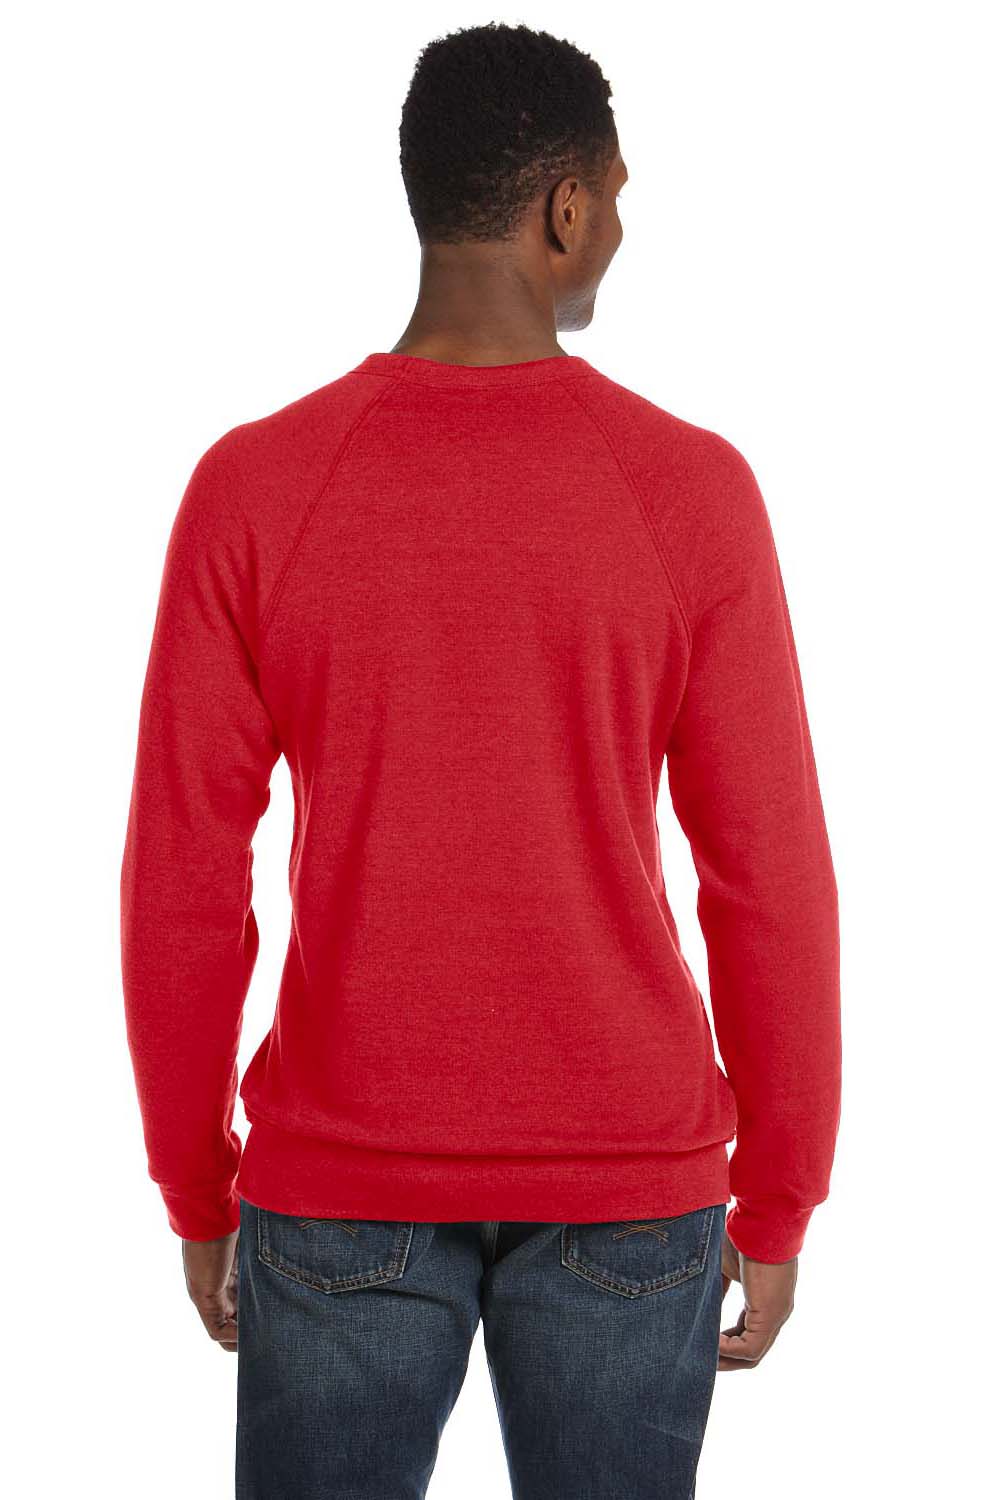 Bella + Canvas BC3901/3901 Mens Sponge Fleece Crewneck Sweatshirt Red Model Back